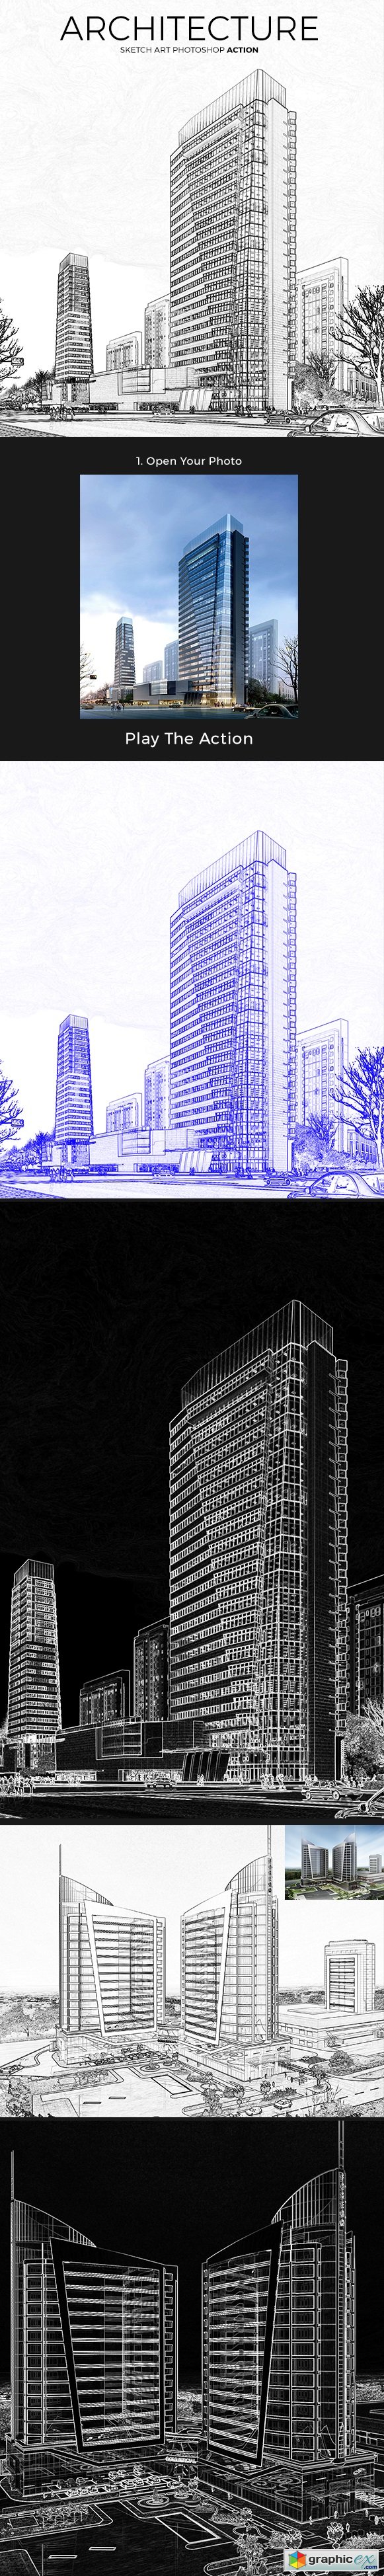 Architecture Sketch Art Photoshop Action 21403946